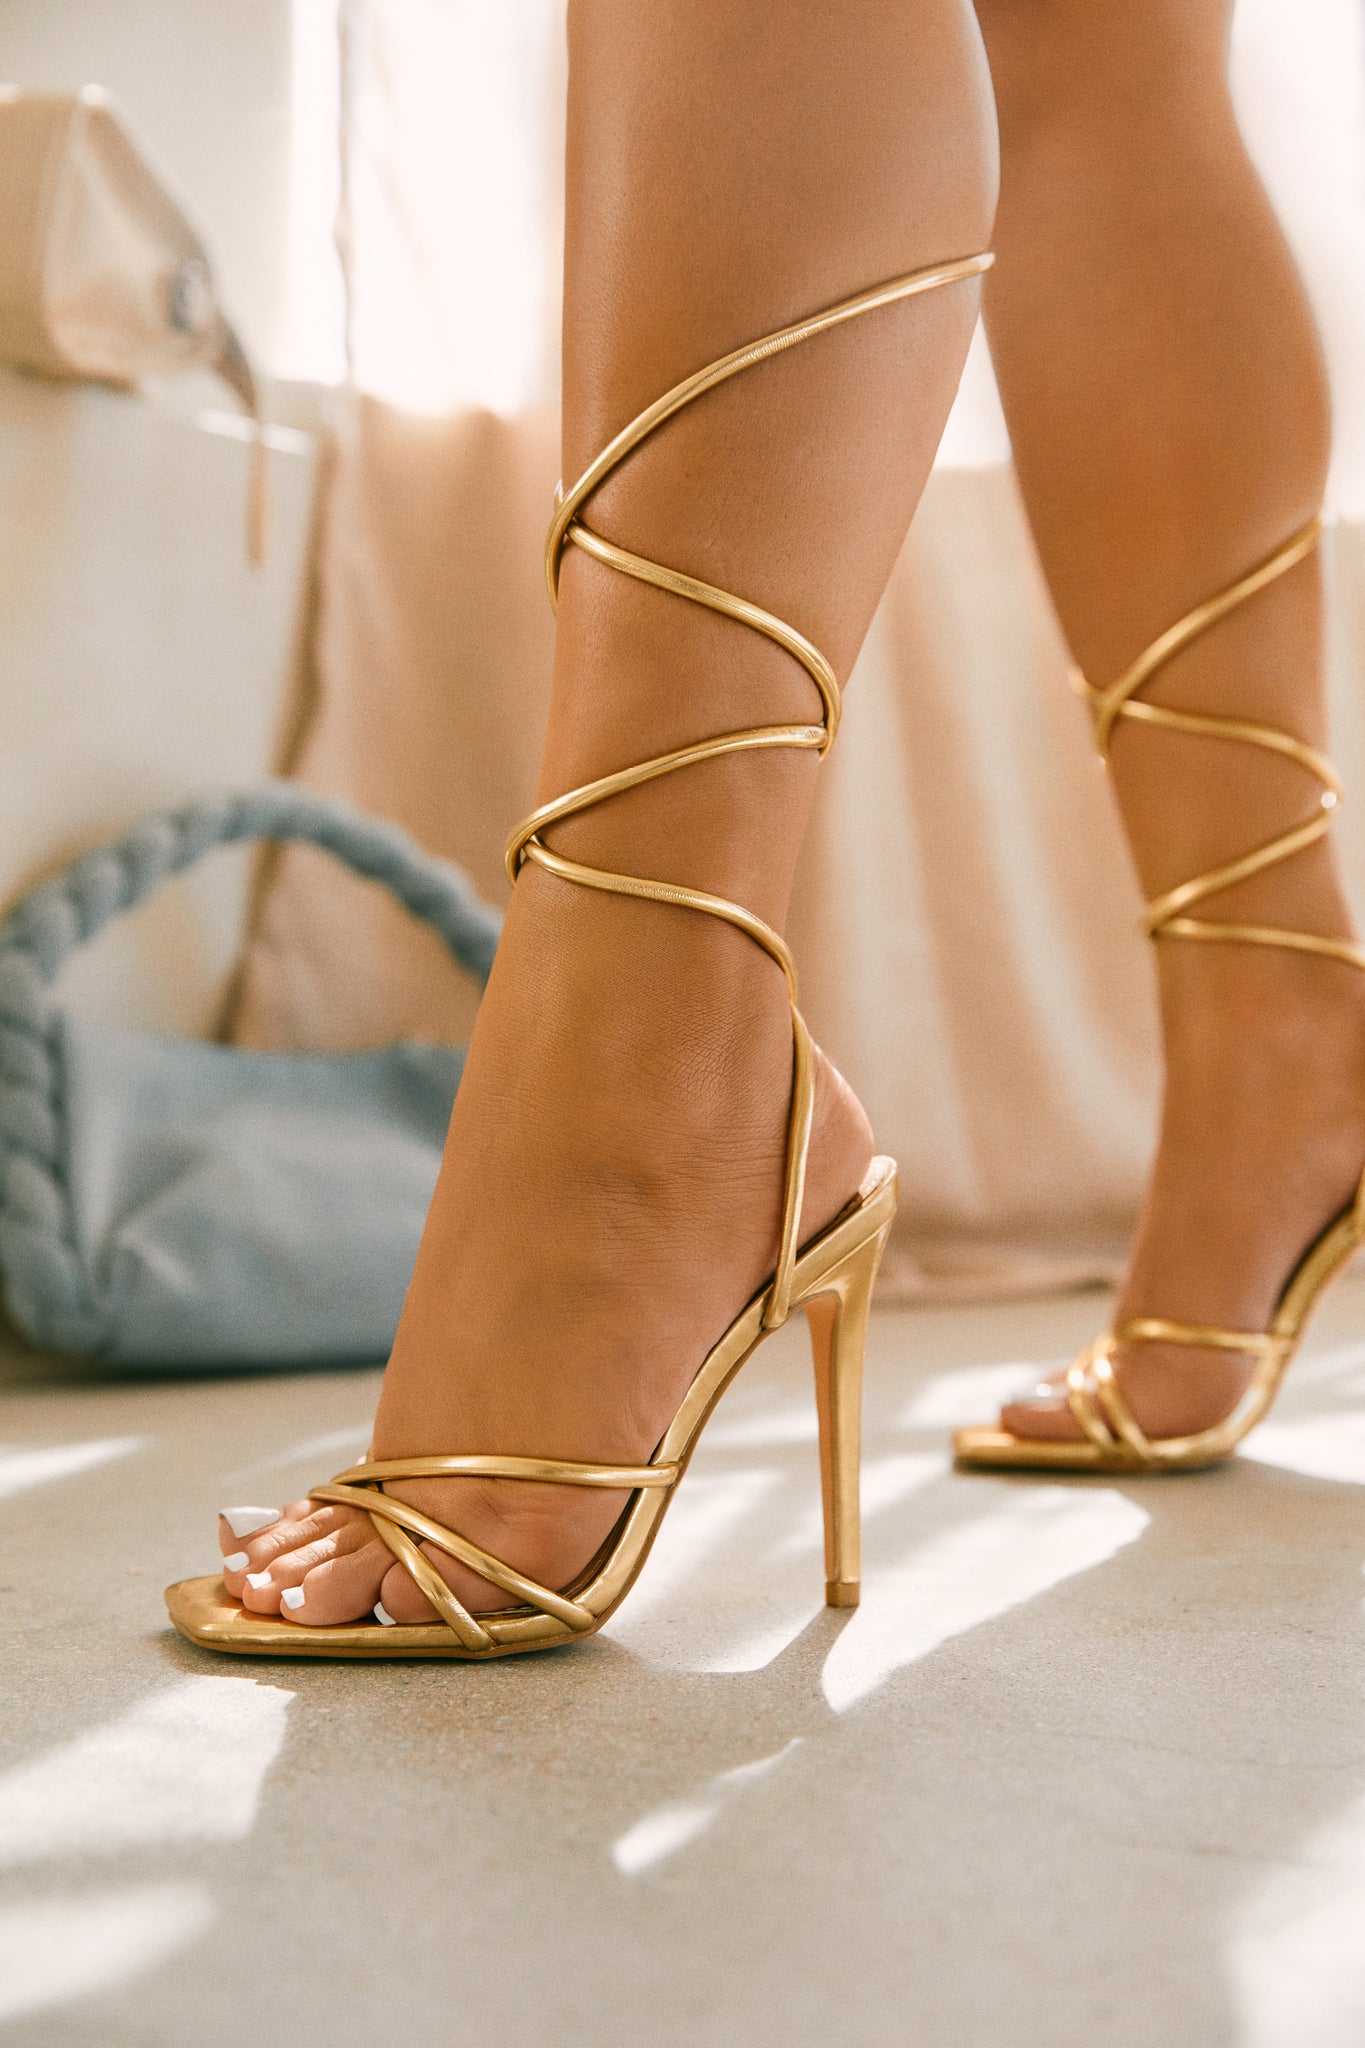 Women's Open Toe Strappy Sandals, Sandals for Wedding, Bride Dress Shoes,  Summer Low Block Heel Sandals, Bling Gold Sandals Gold 7.5 - Walmart.com